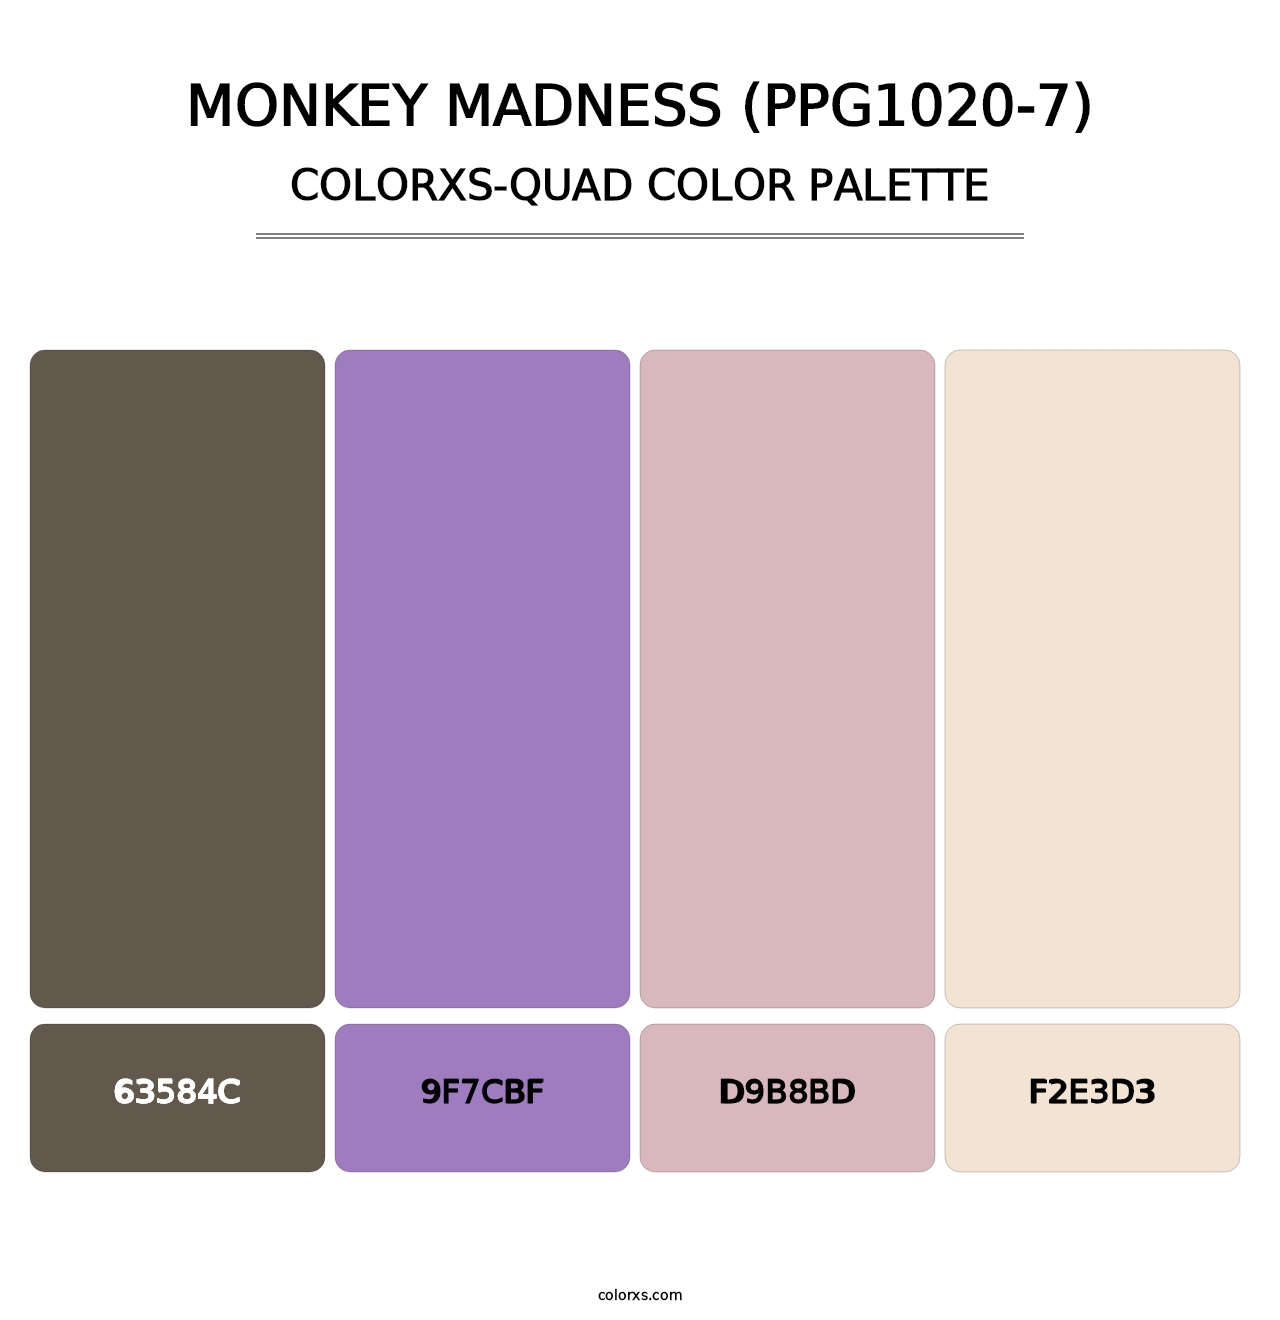 Monkey Madness (PPG1020-7) - Colorxs Quad Palette